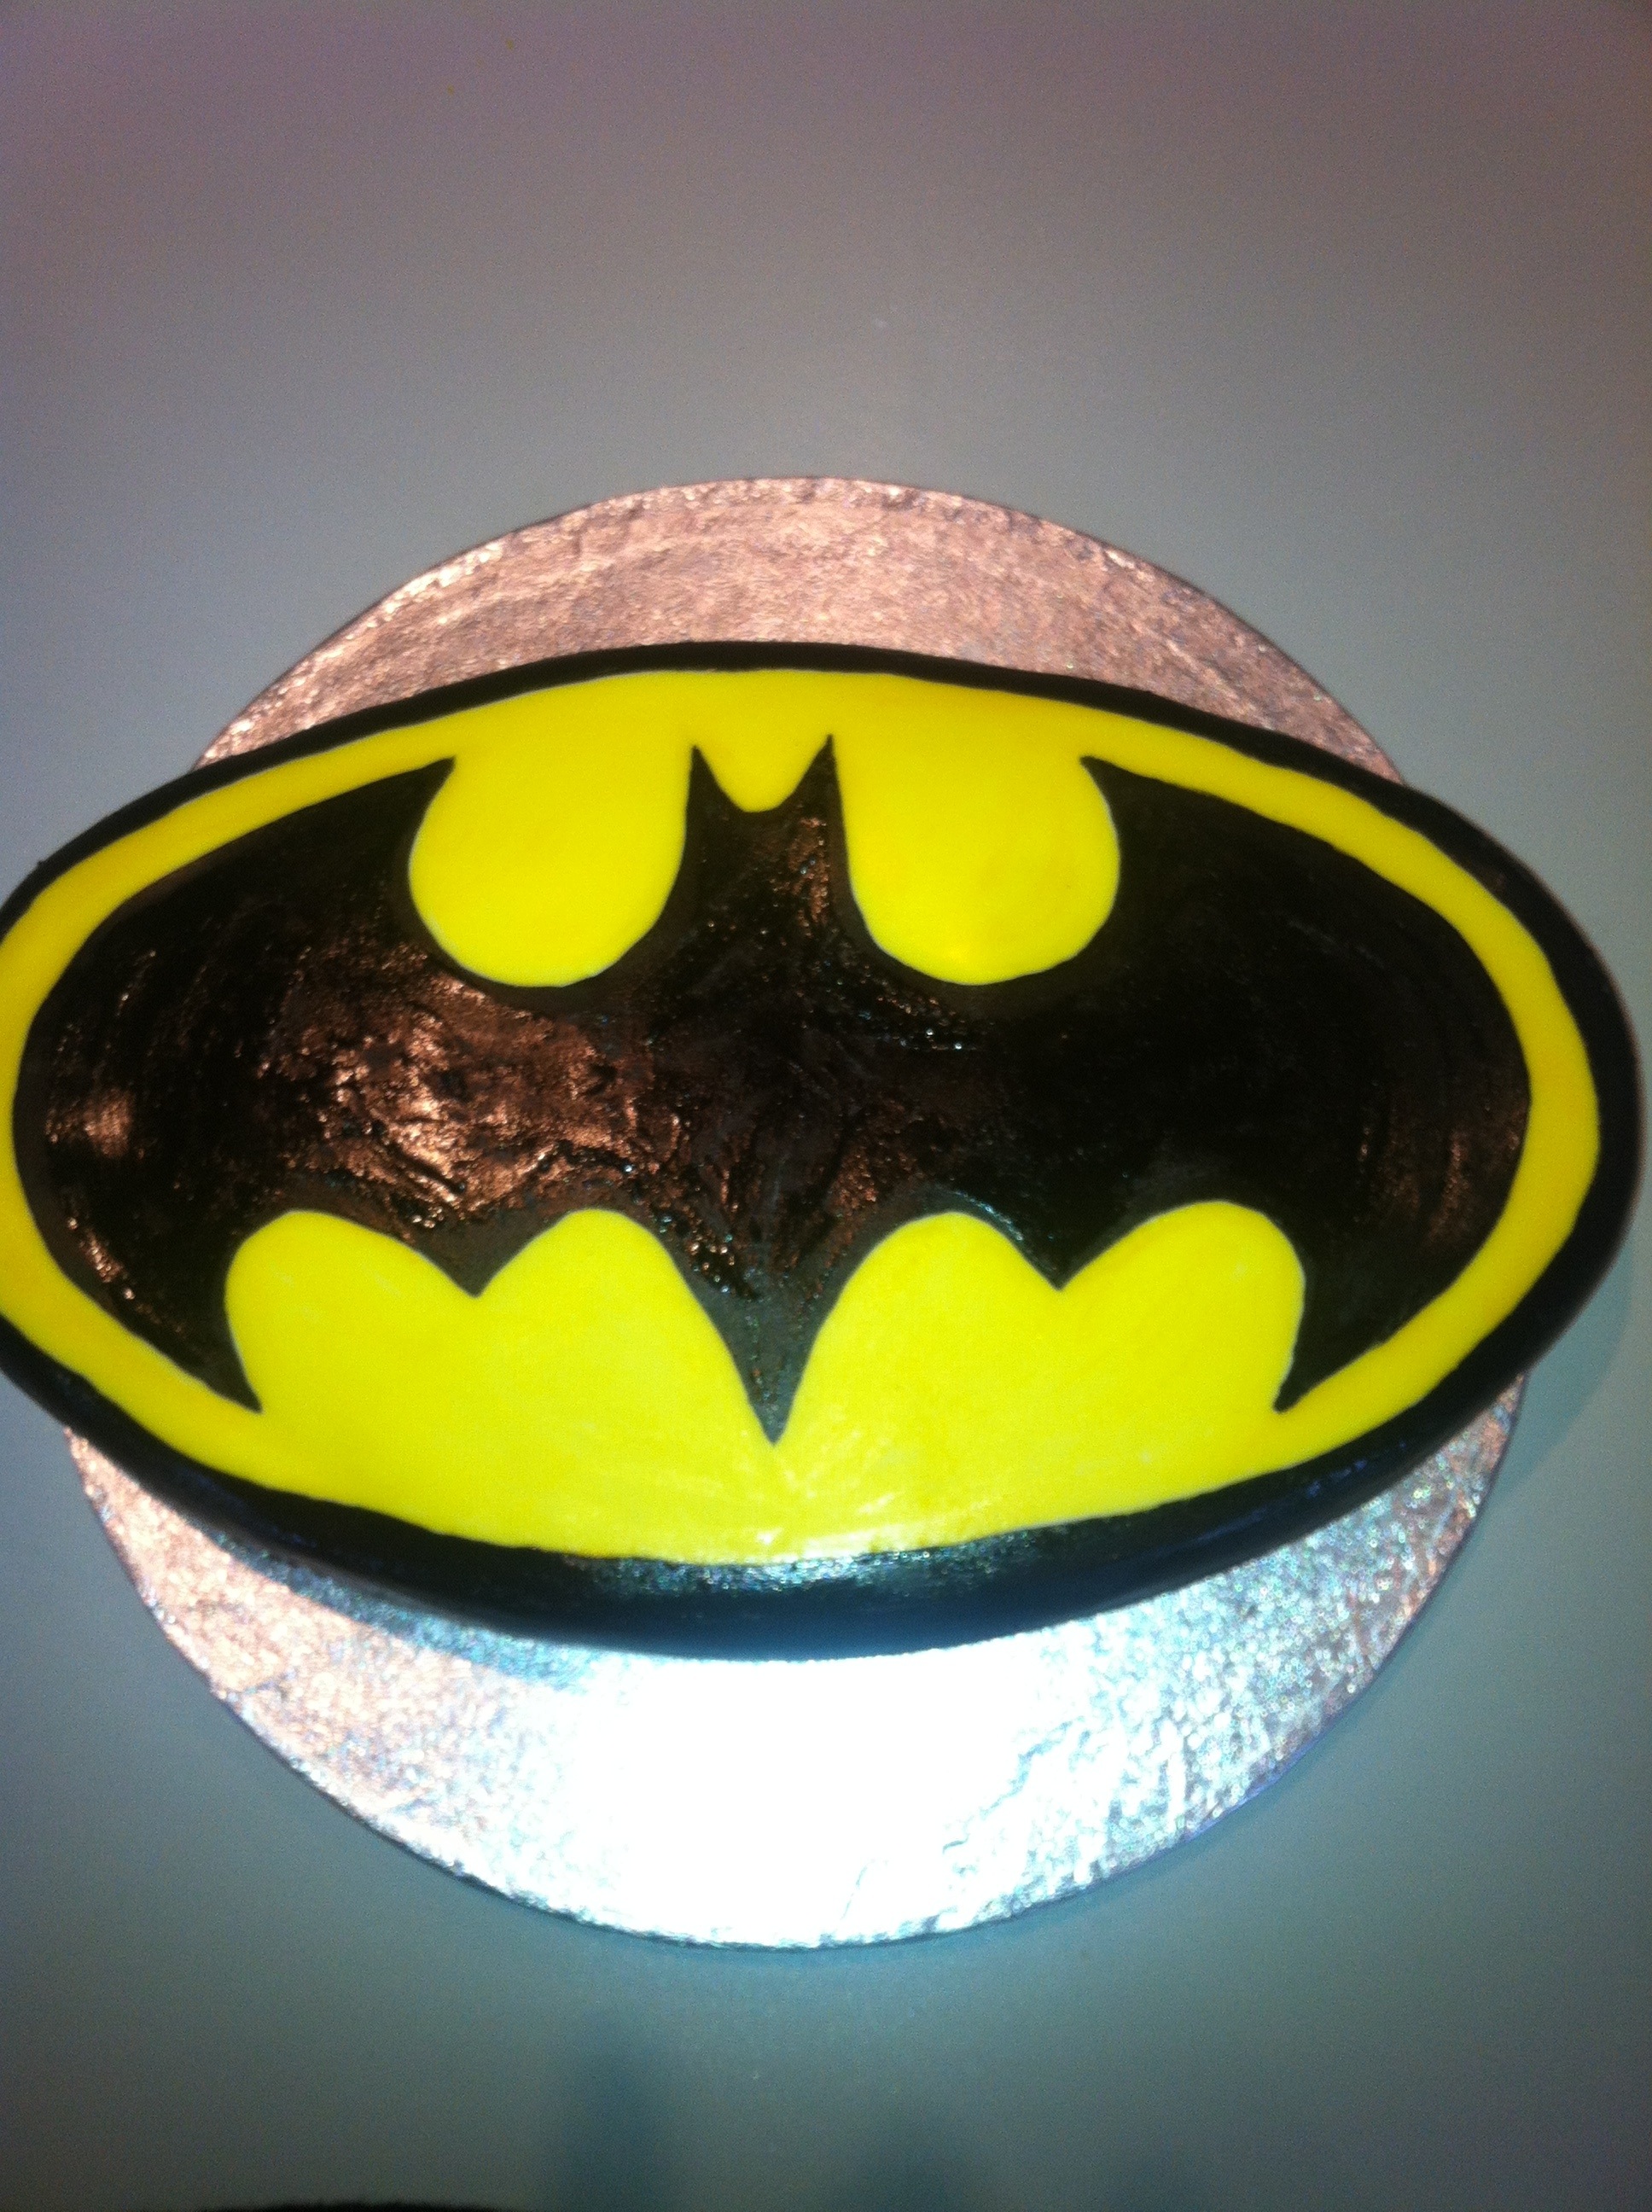 Batman Symbol Cake